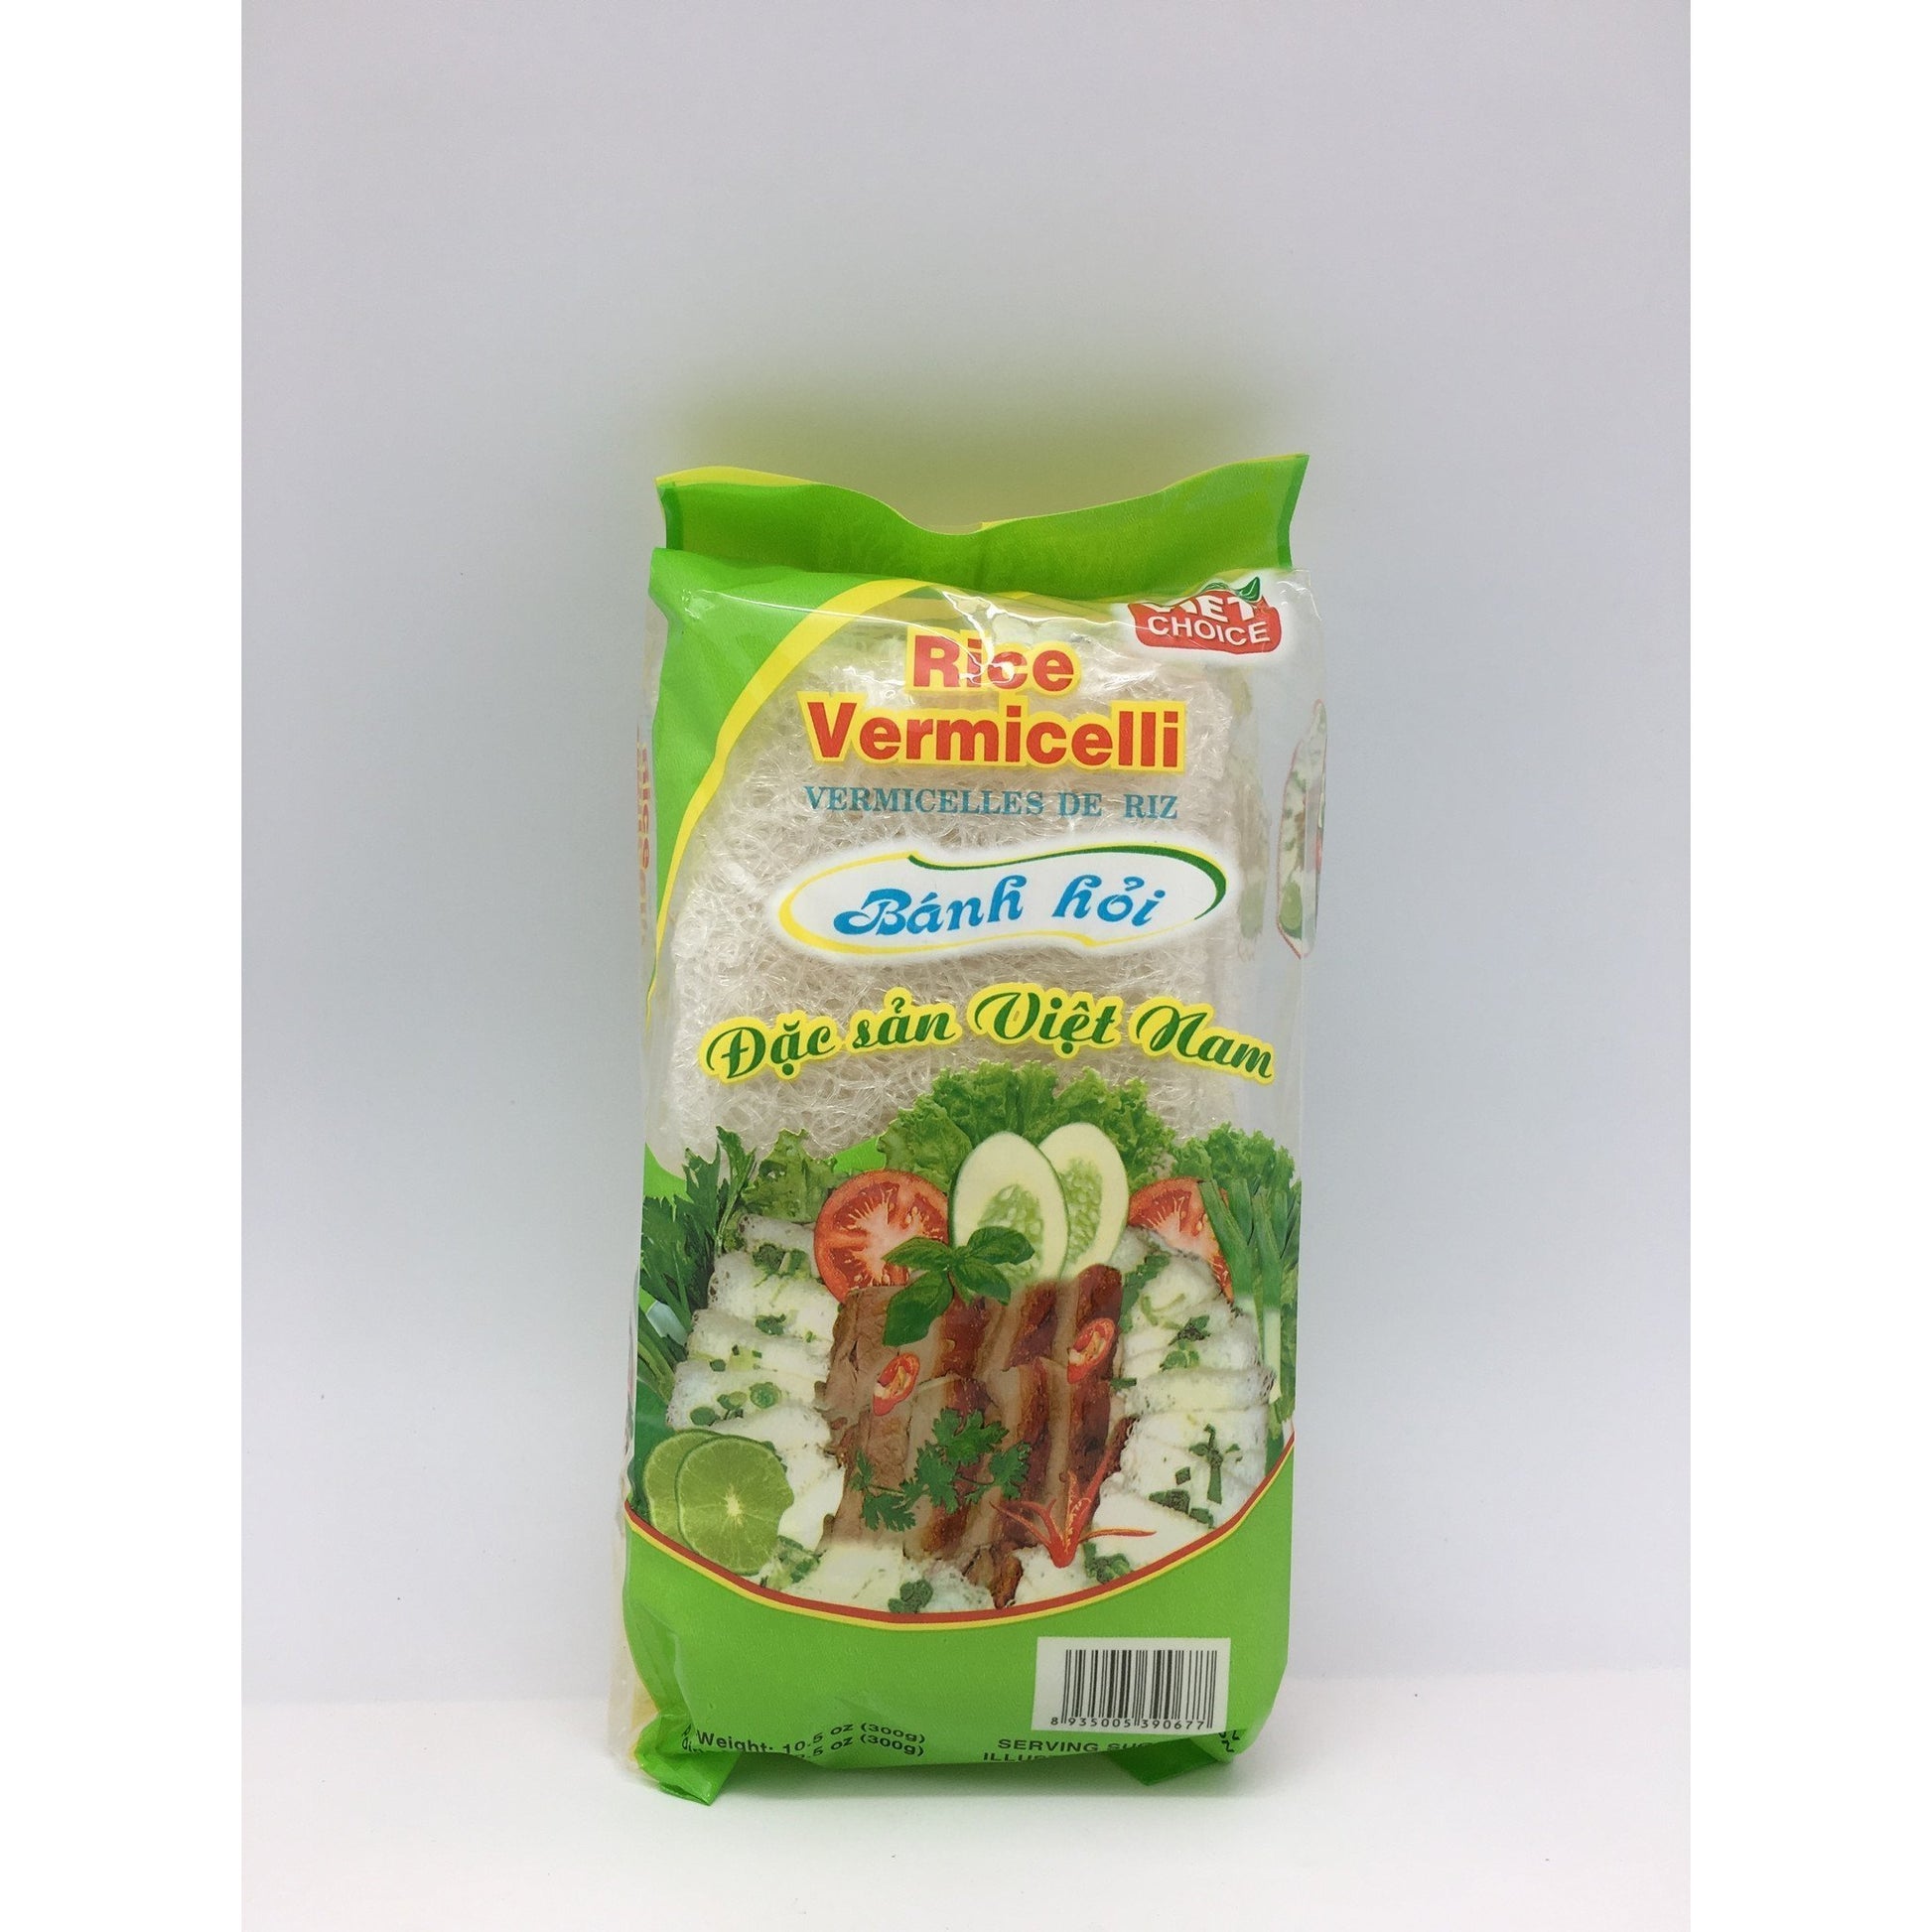 N032C Viet Choice Brand - Instant Rice Vermicilli 300g - 36 bags / 1CTN - New Eastland Pty Ltd - Asian food wholesalers